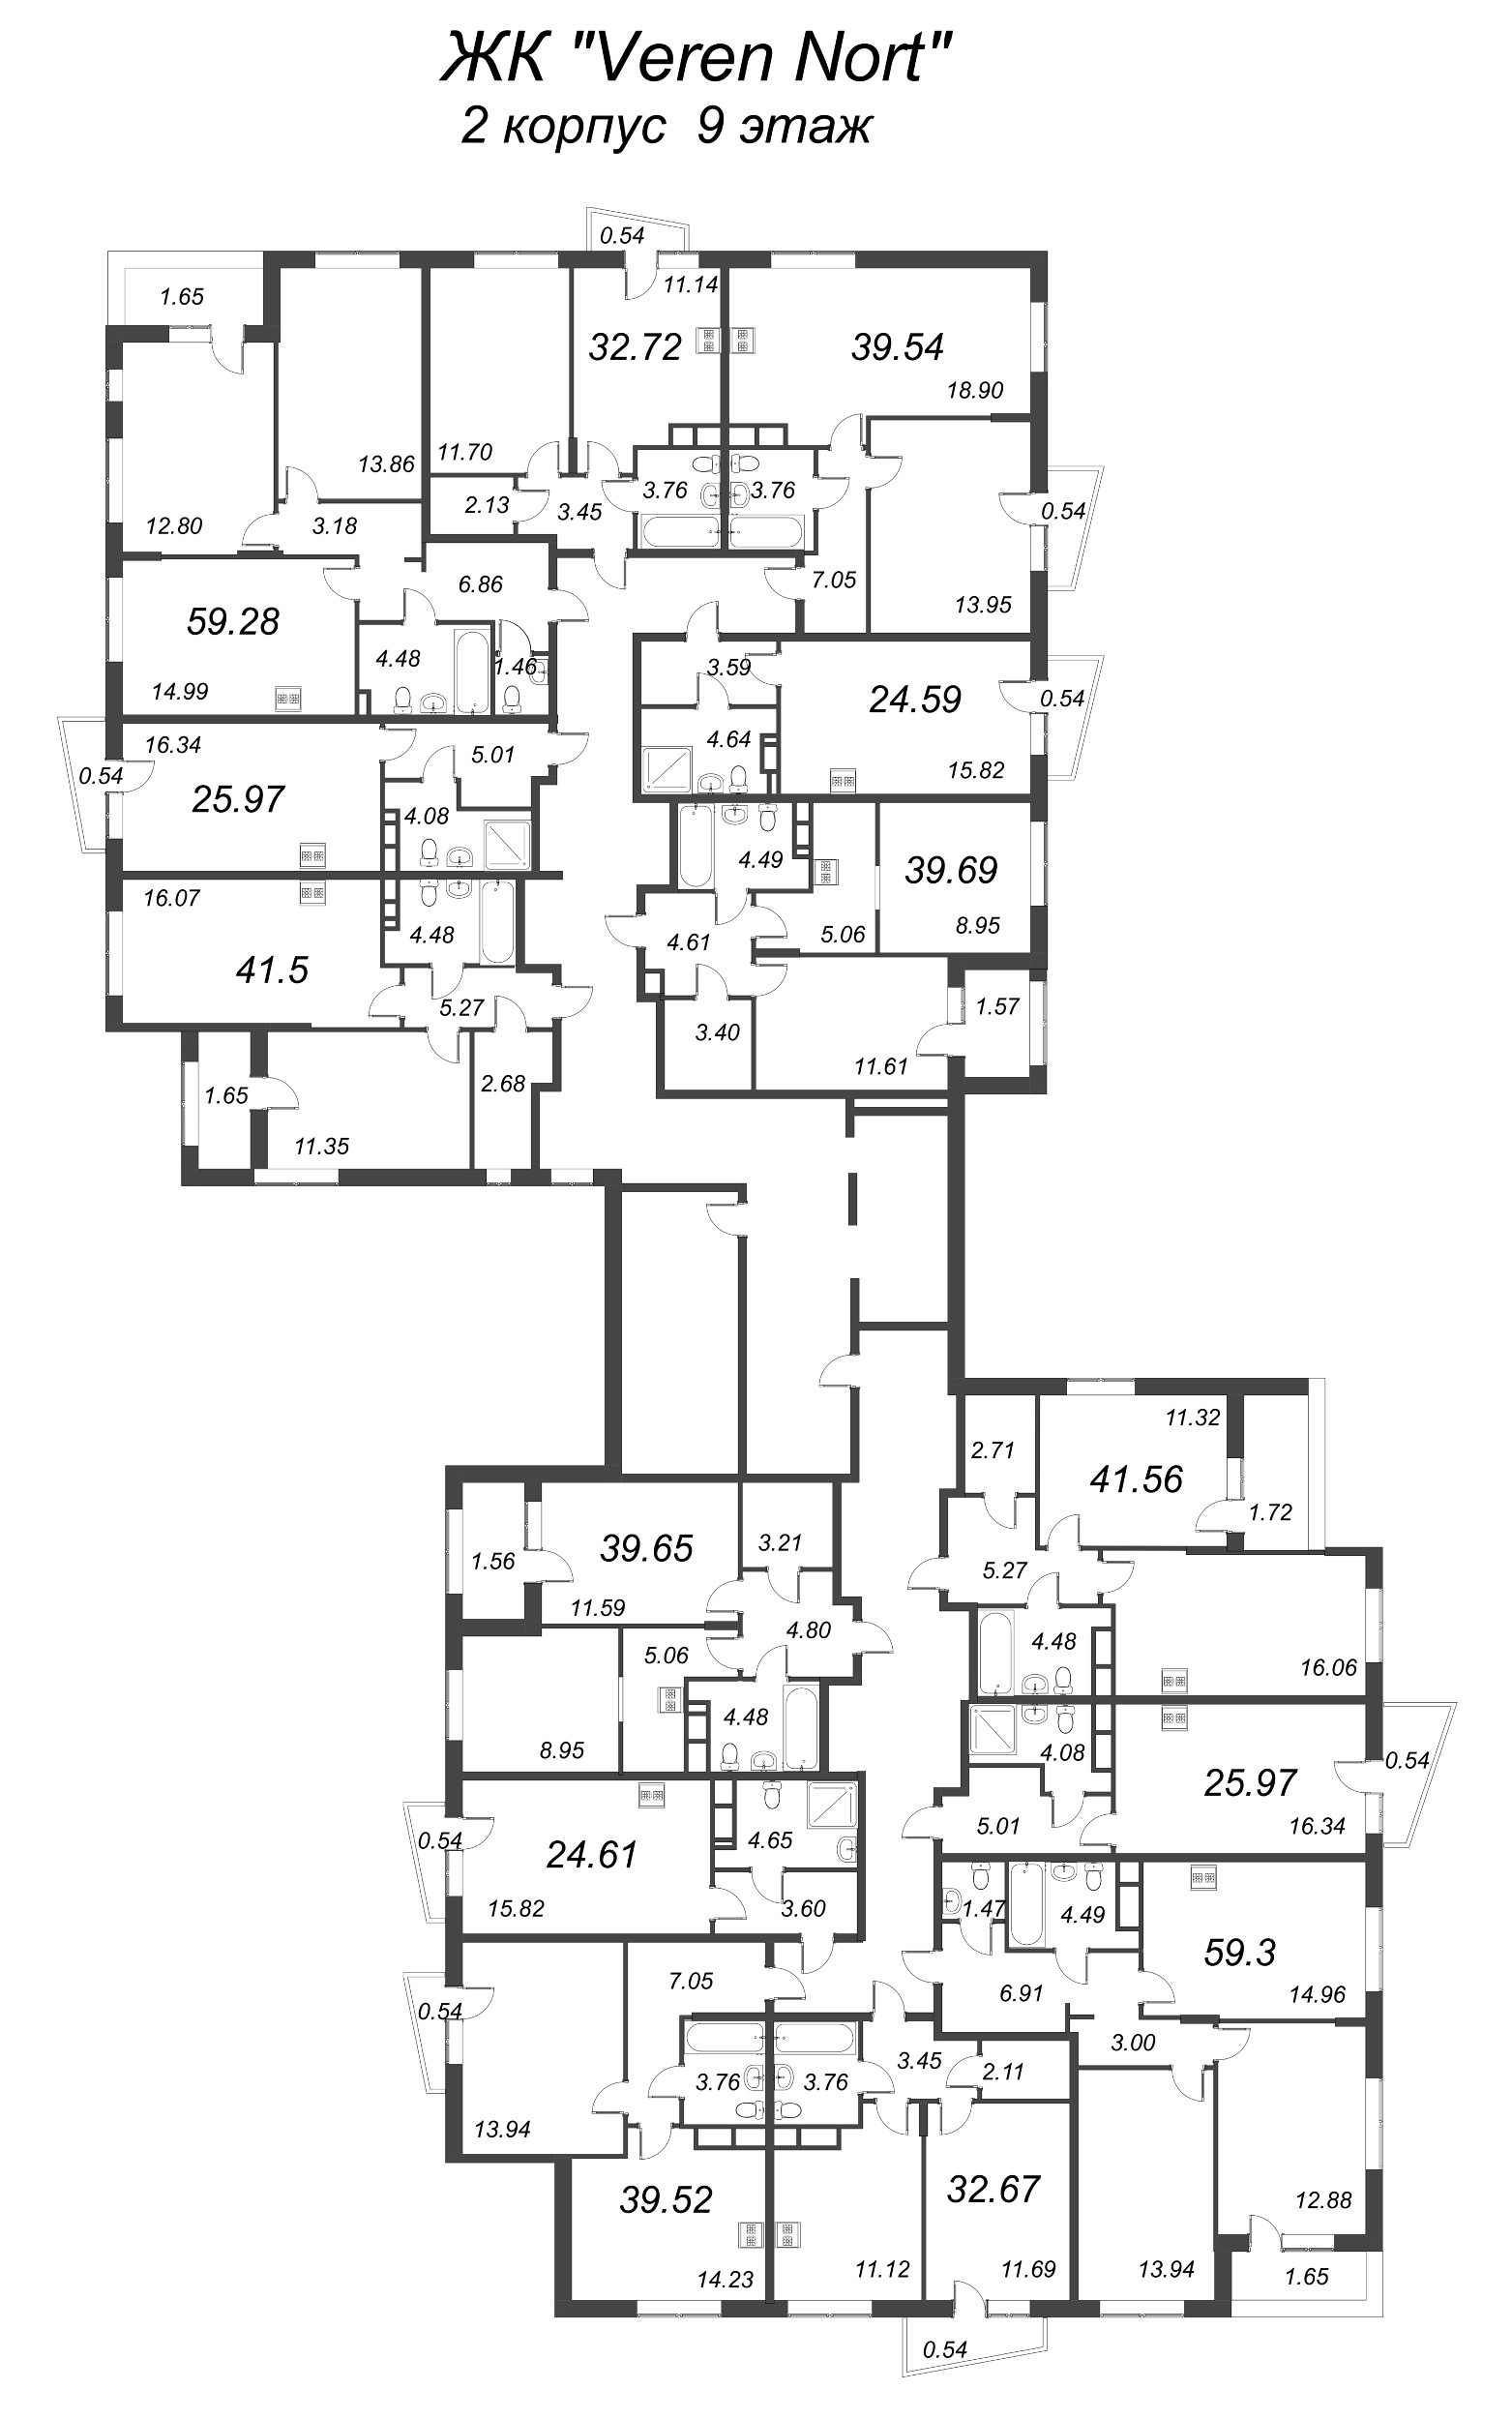 2-комнатная (Евро) квартира, 39.52 м² - планировка этажа